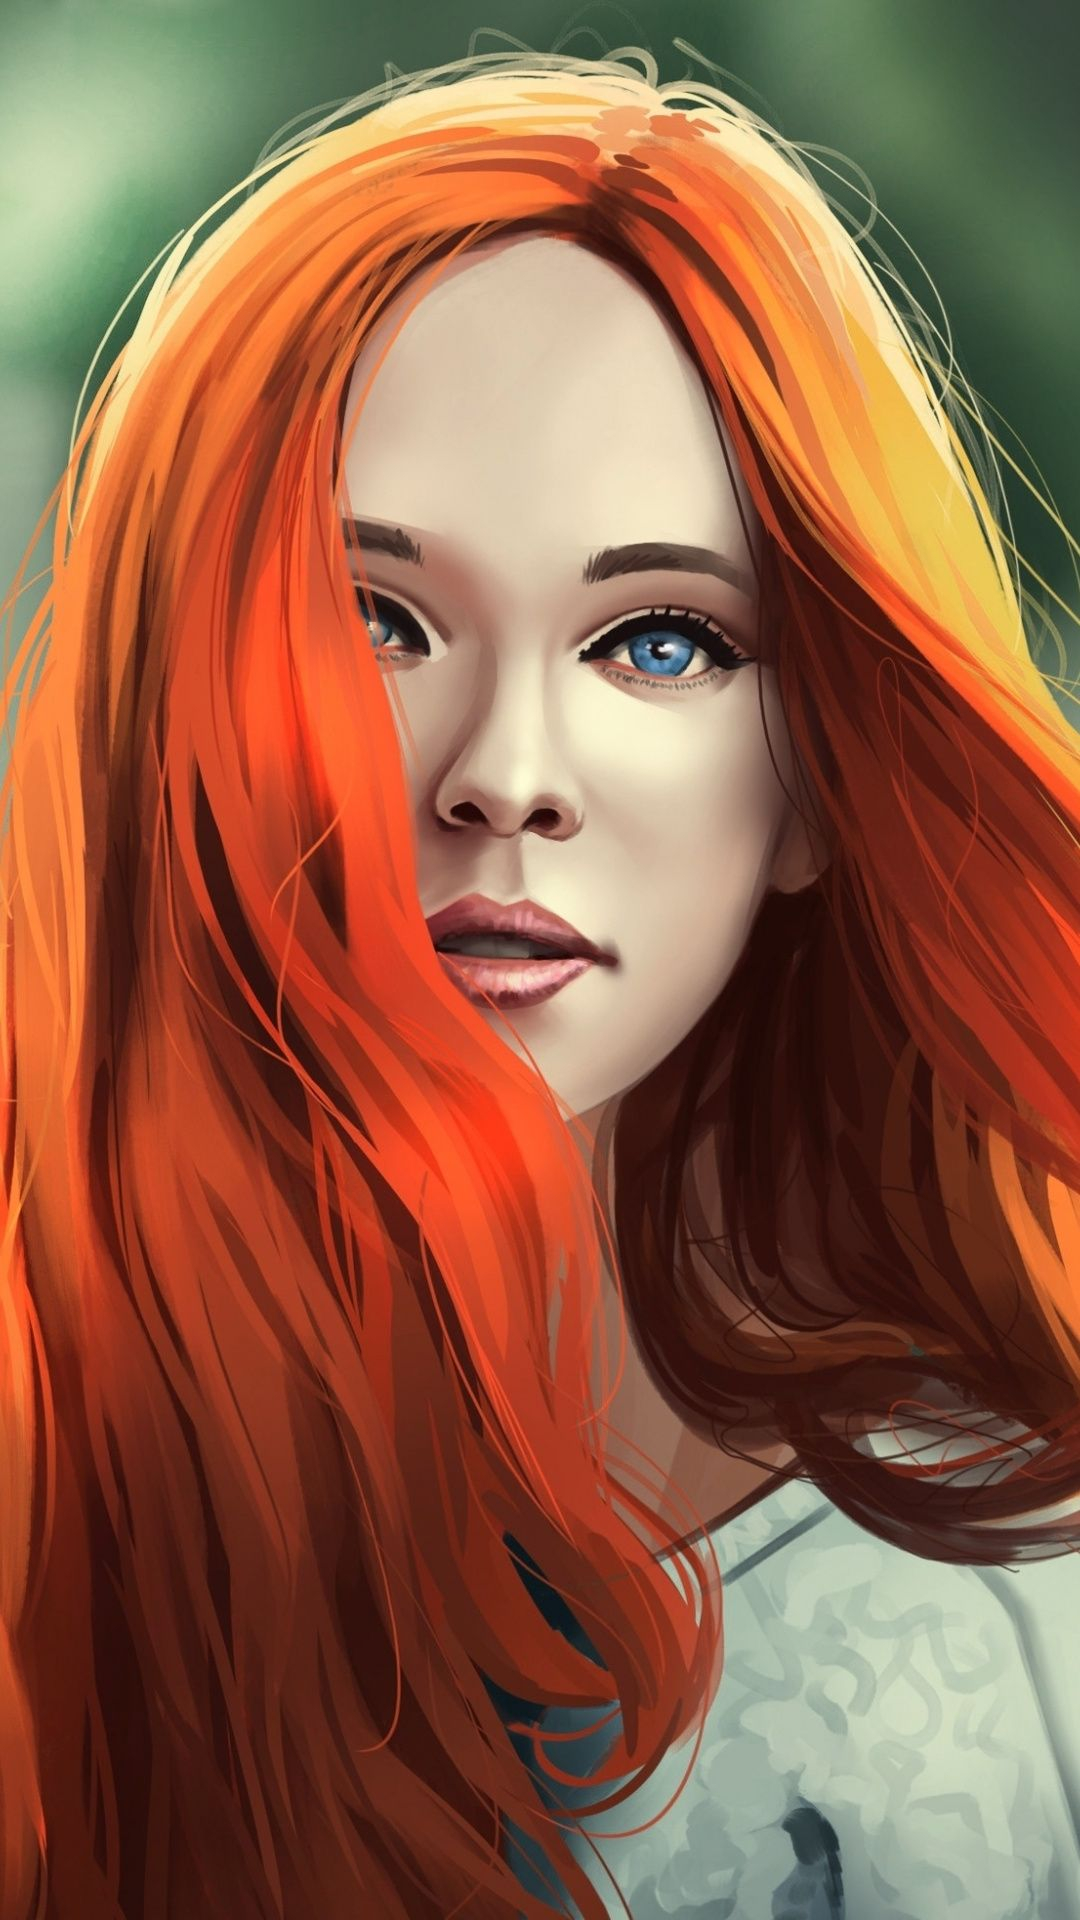 1080x1920 Girl, artwork, pretty, redhead wallpaper | Digital art girl, Redhead, Art girl